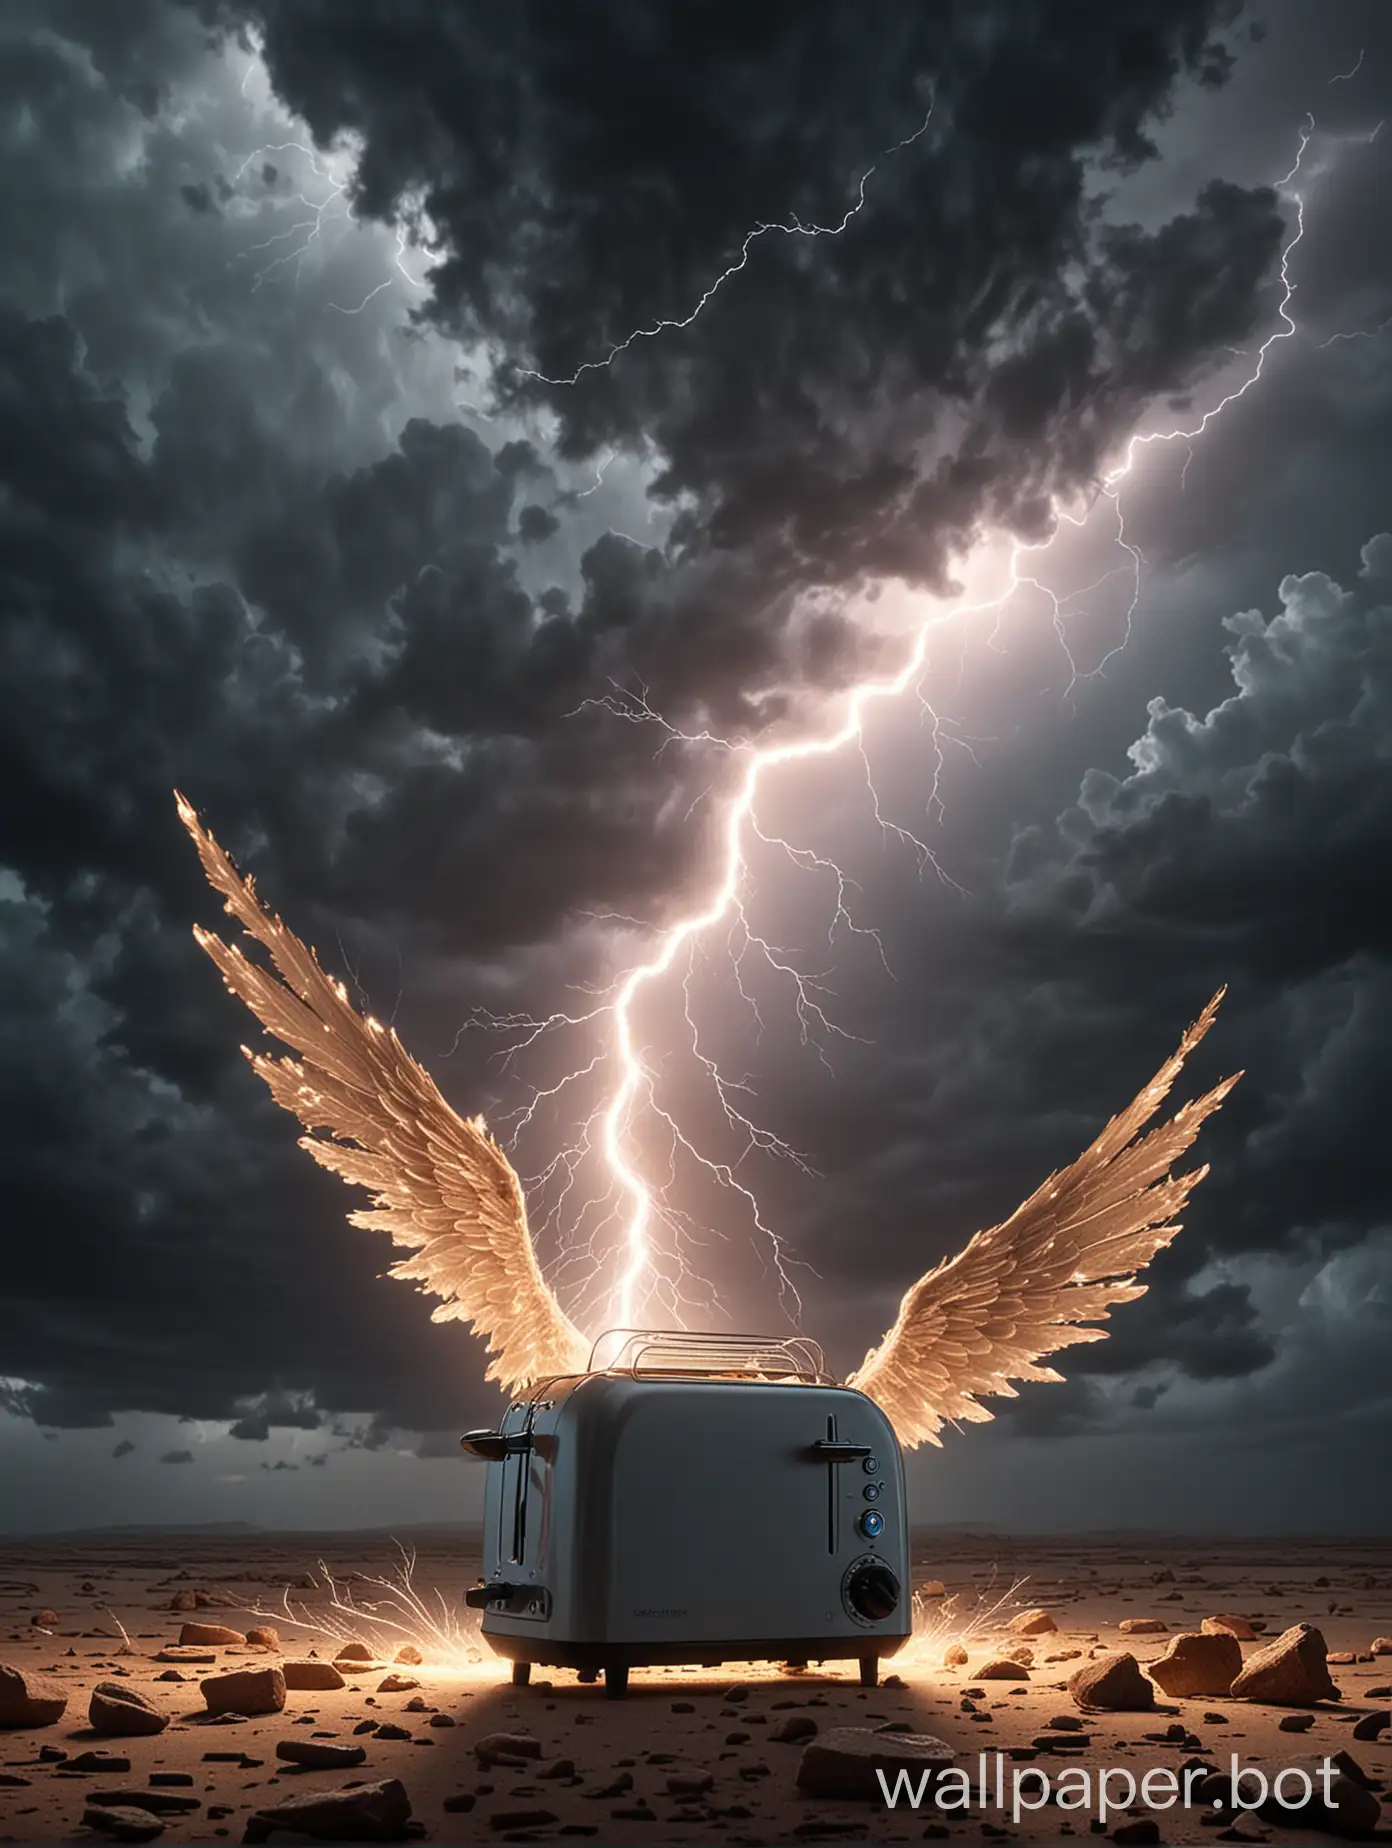 Flying-Toaster-Struck-by-Lightning-in-Stormy-Sky